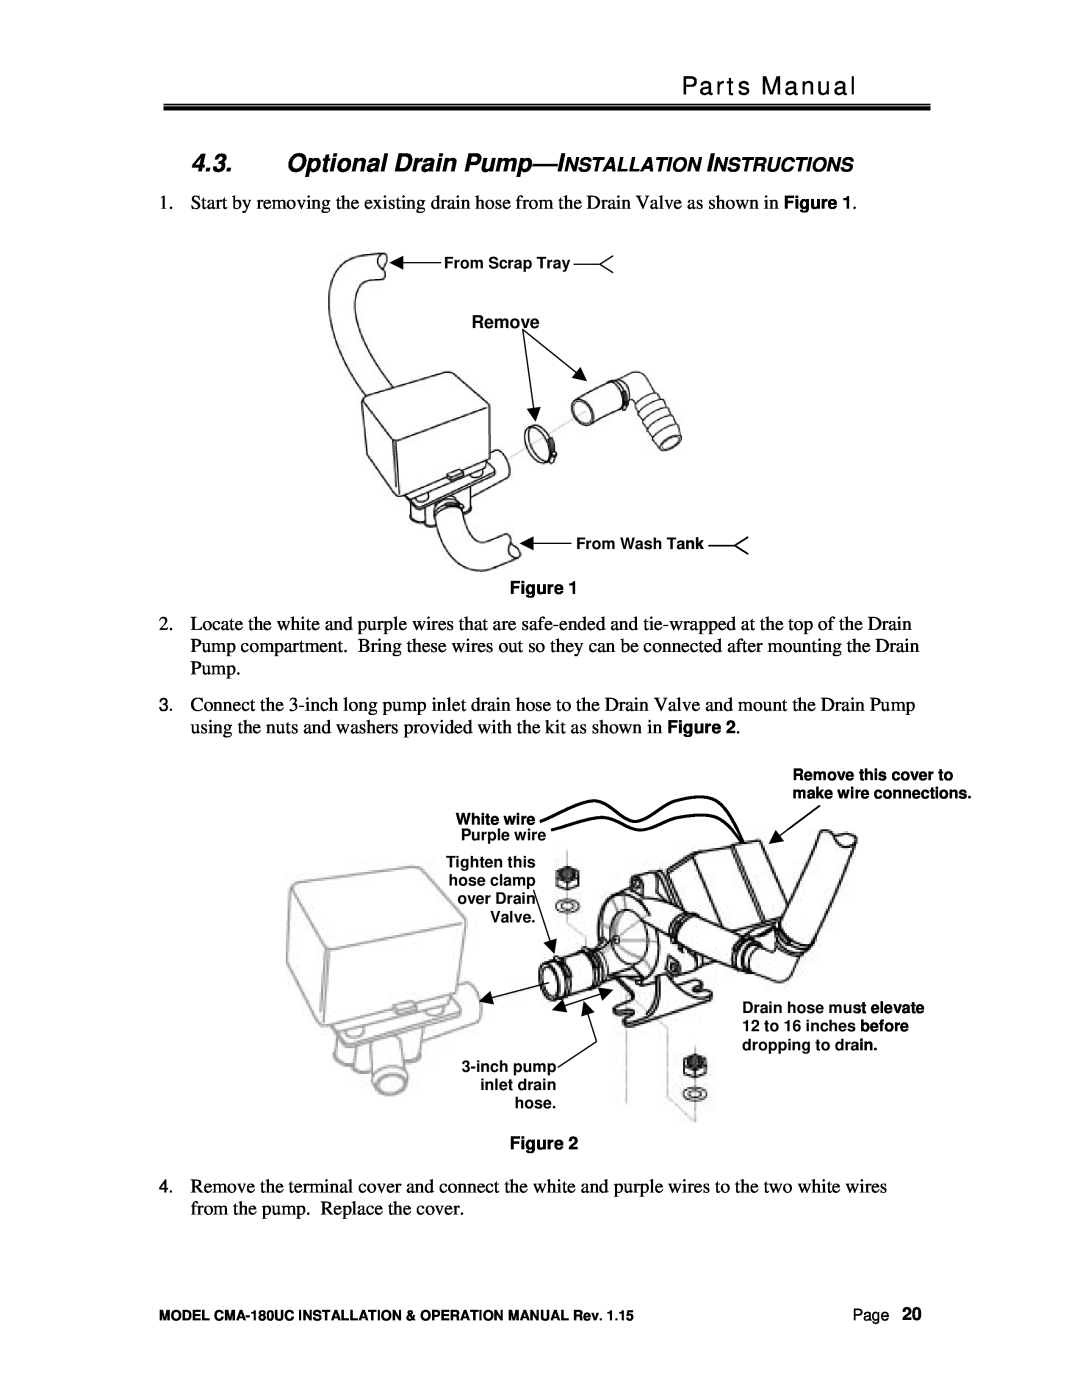 CMA Dishmachines CMA-180UC manual Optional Drain Pump-INSTALLATION INSTRUCTIONS, Parts Manual, Remove 